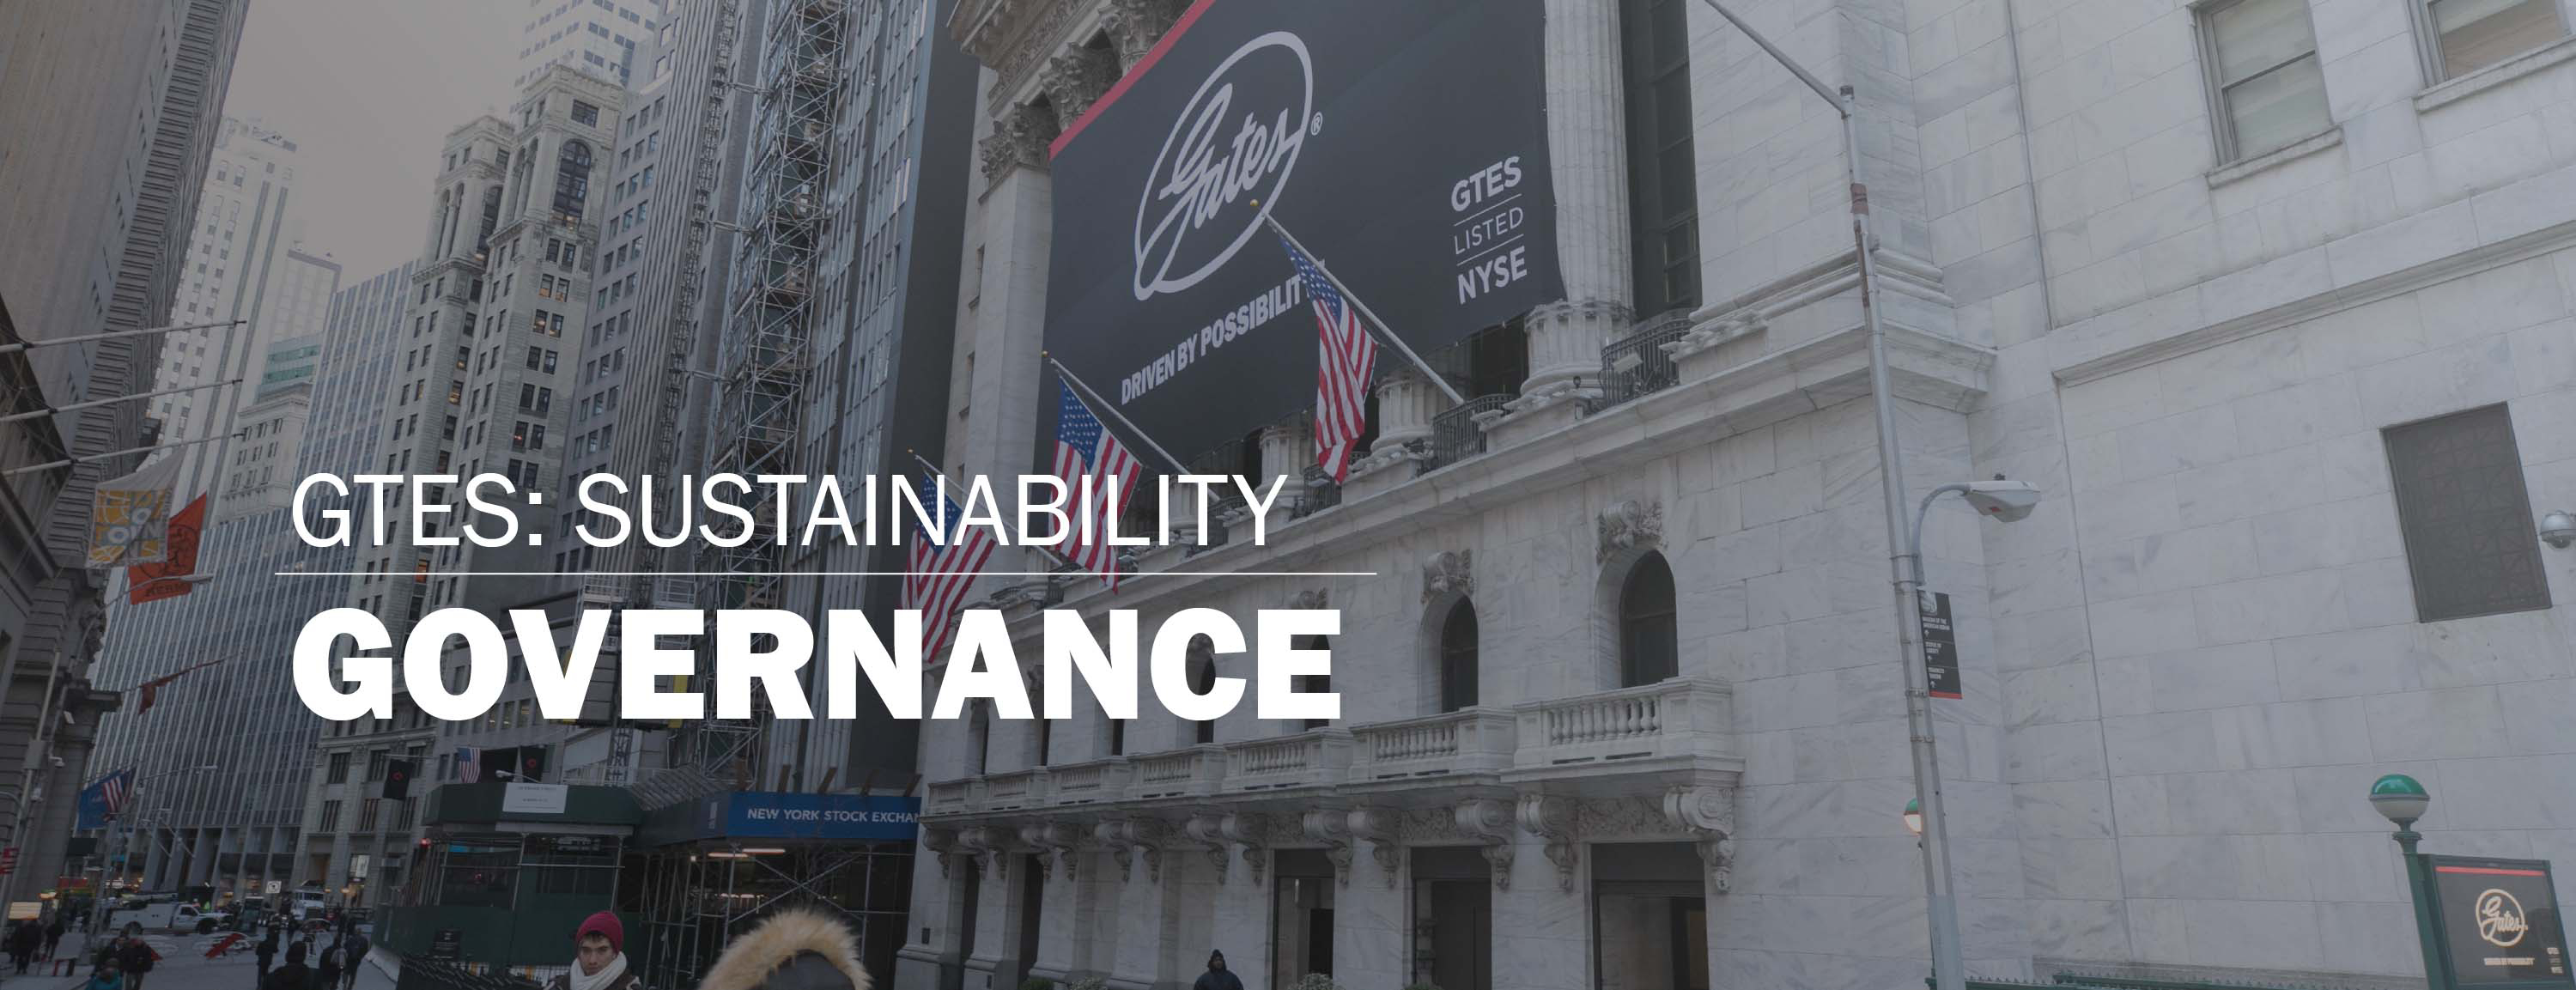 sustainability-corporate-governance